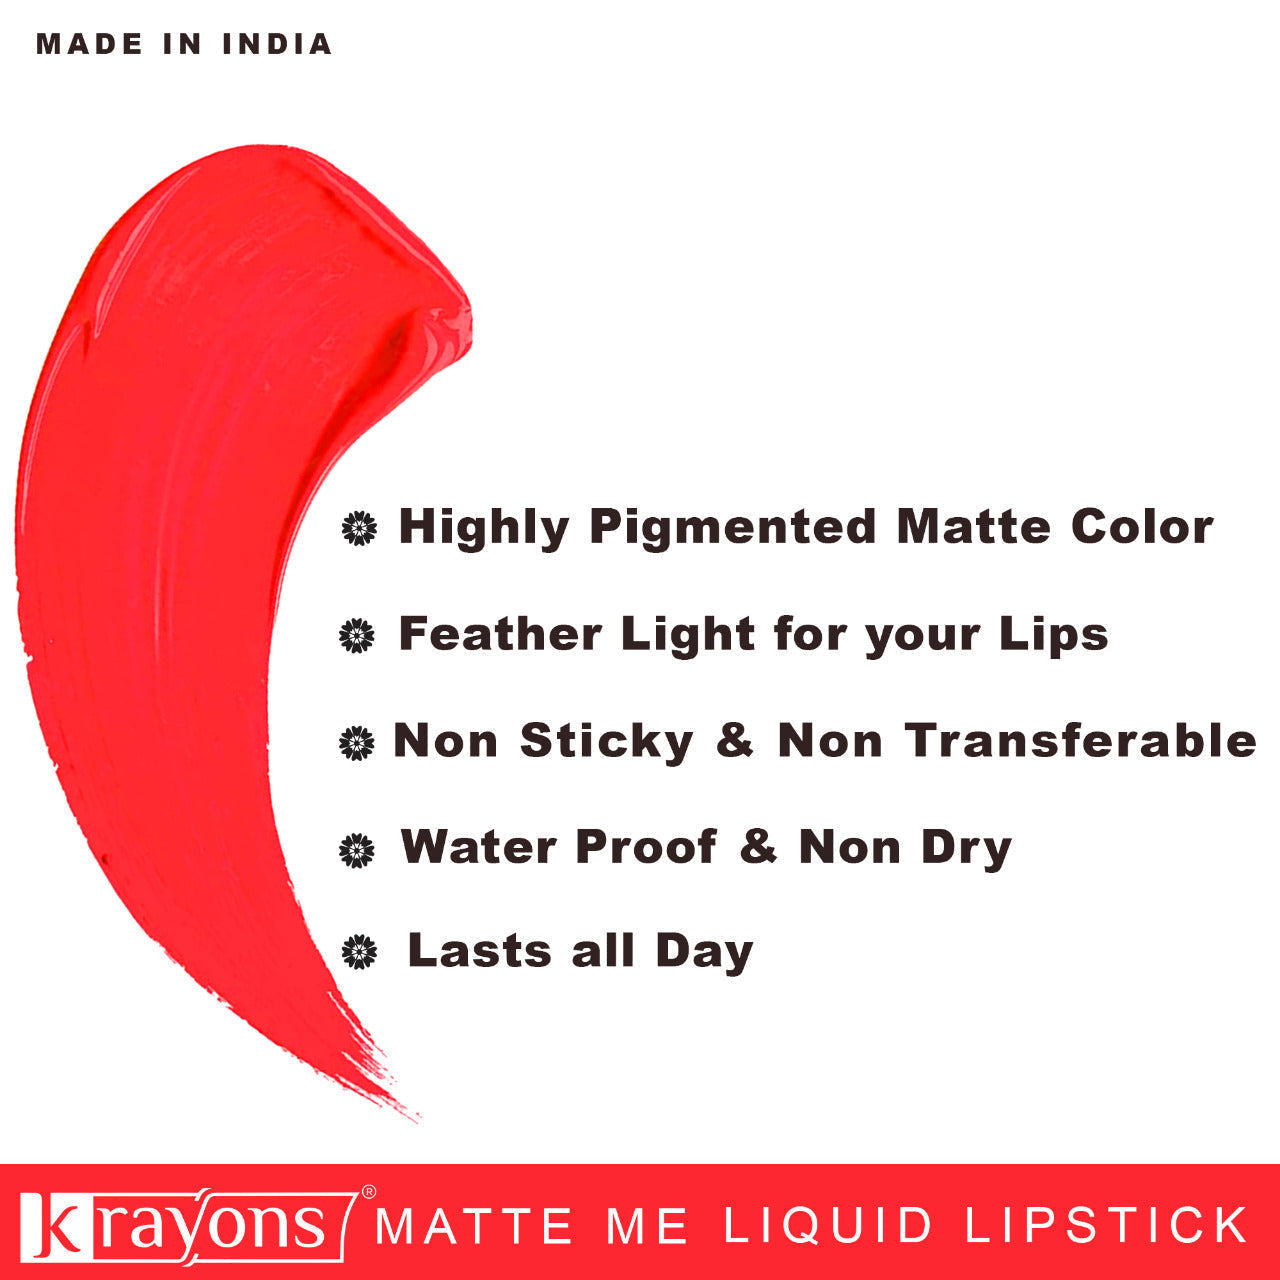 Krayons Matte Me Ultra Smooth Matte Liquid Lip Color, Mask Proof, Waterproof, Longlasting, 5ml Each, Combo, Pack of 3 (Sunset Orange, Majestic Maroon, Nude Embrace)